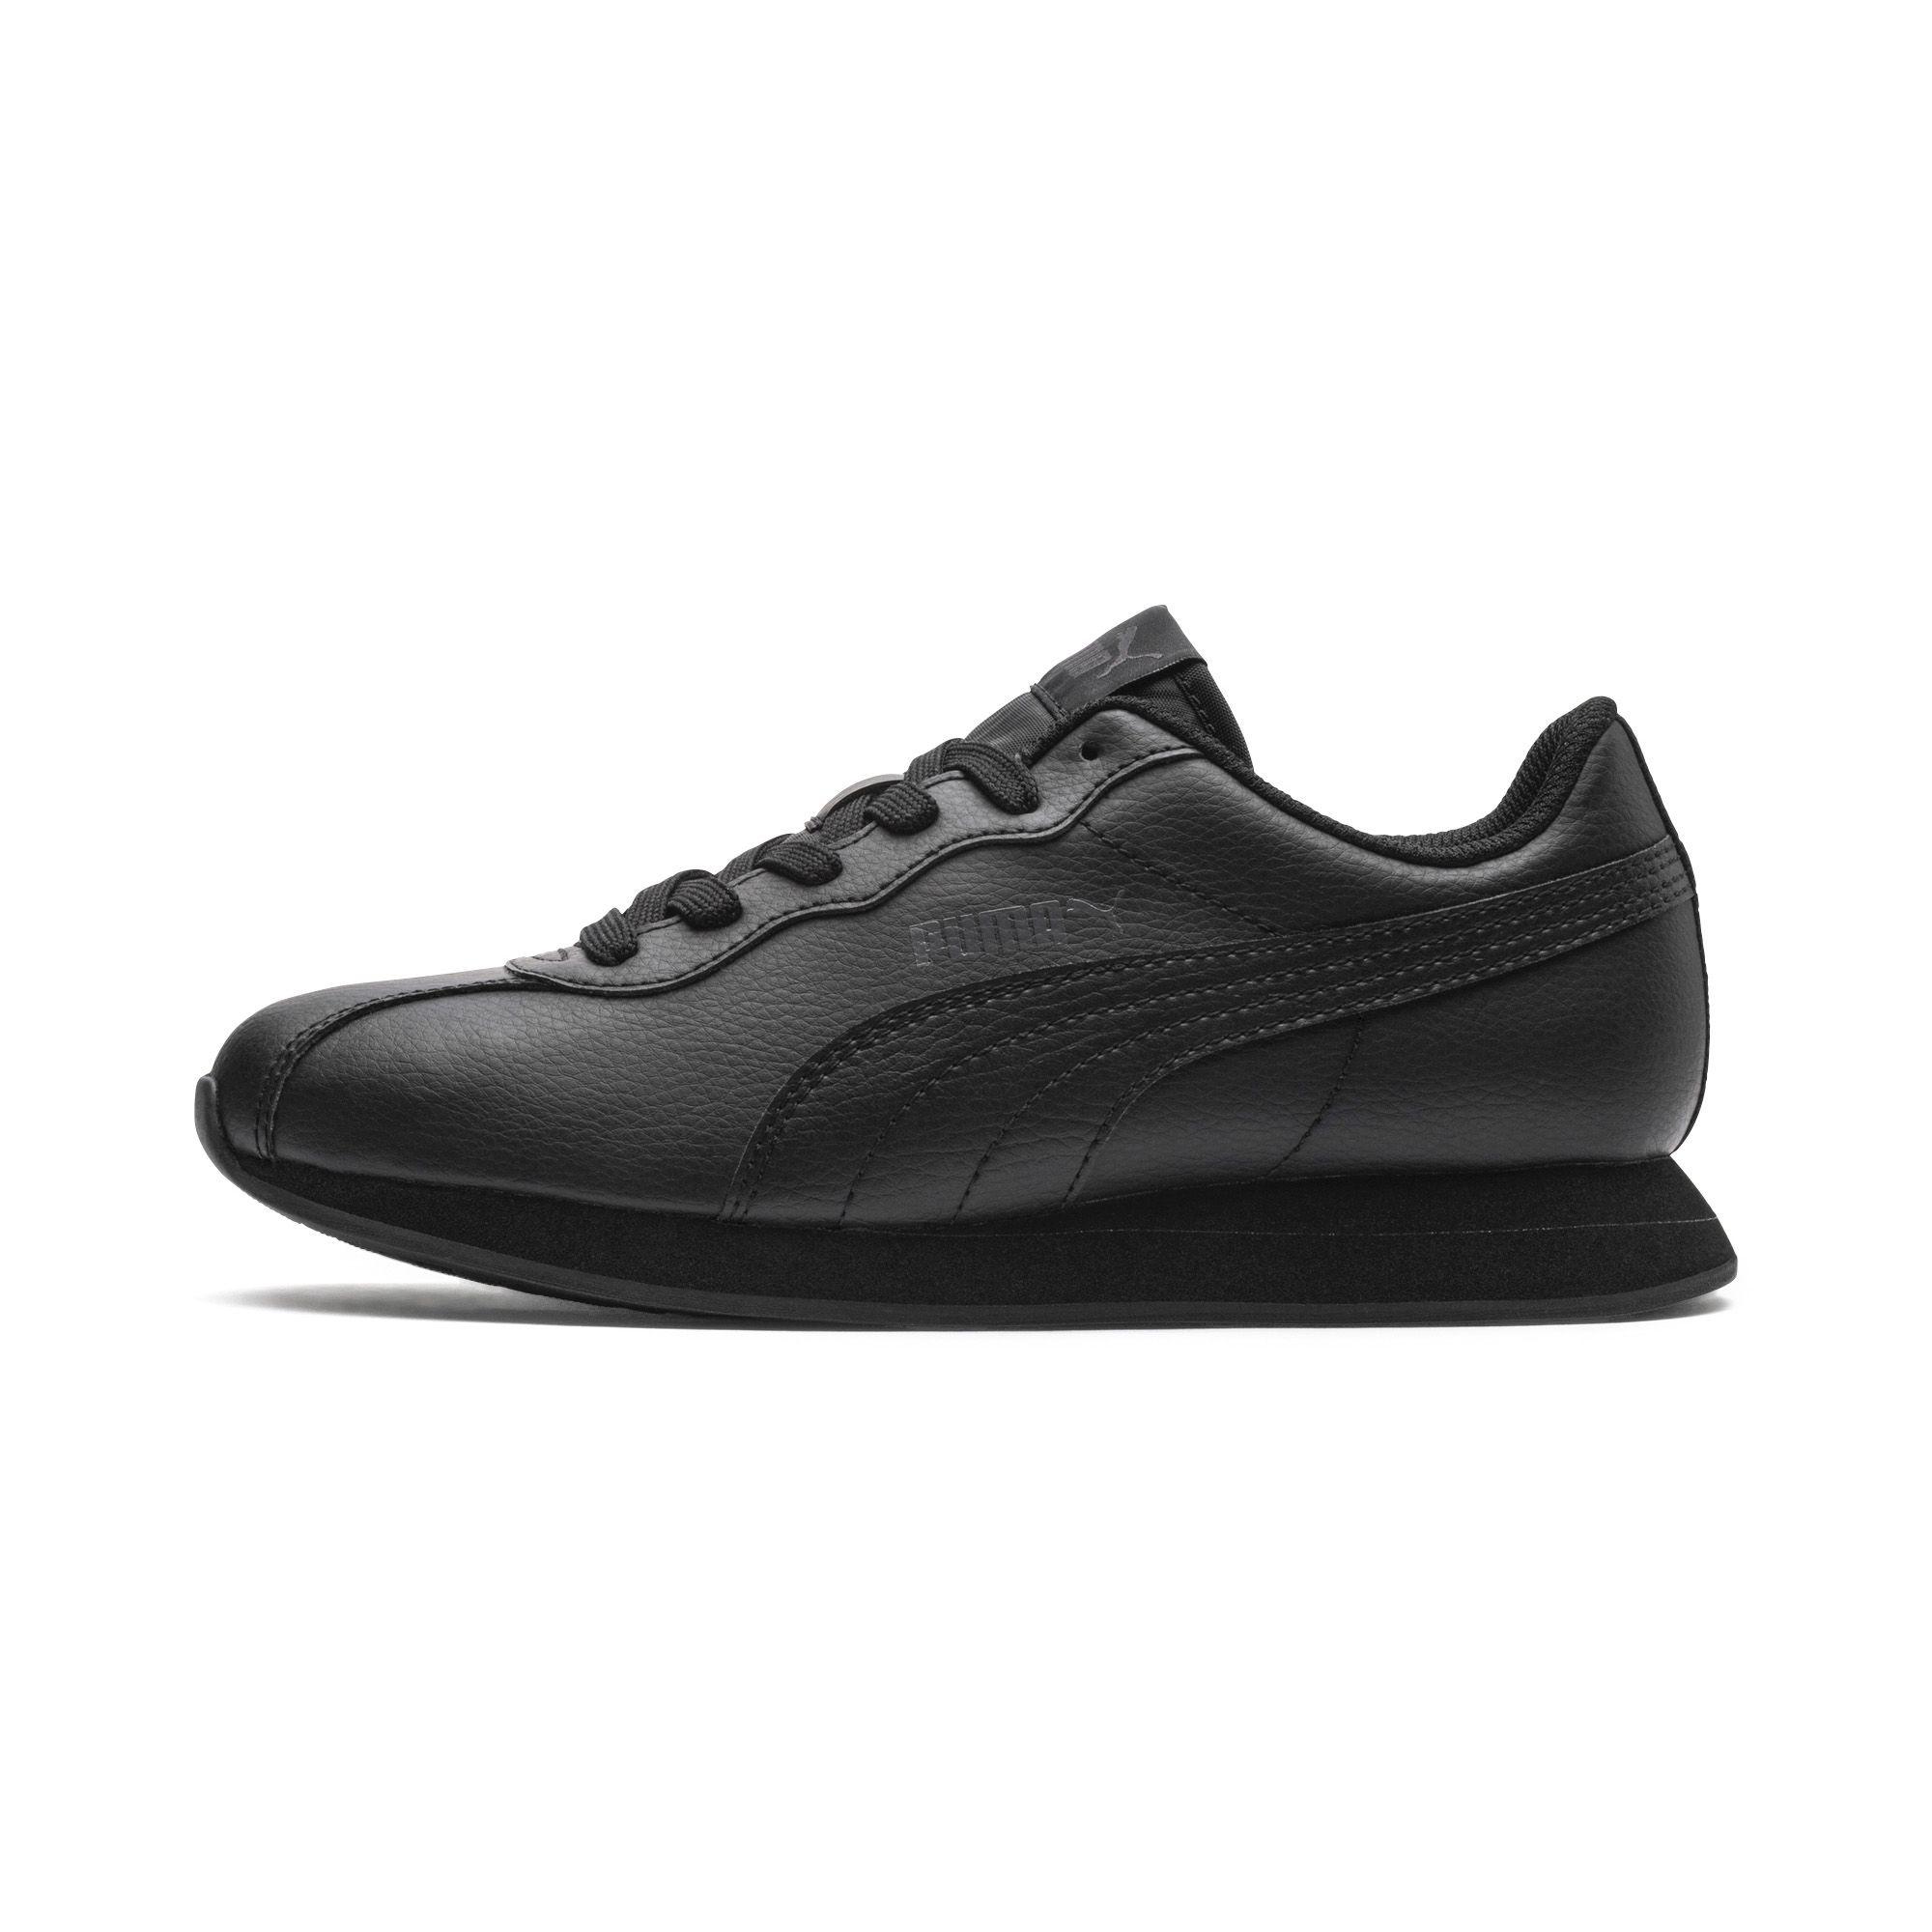 PUMA Turin Ii ( Black/ Black) Shoes for Men - Lyst